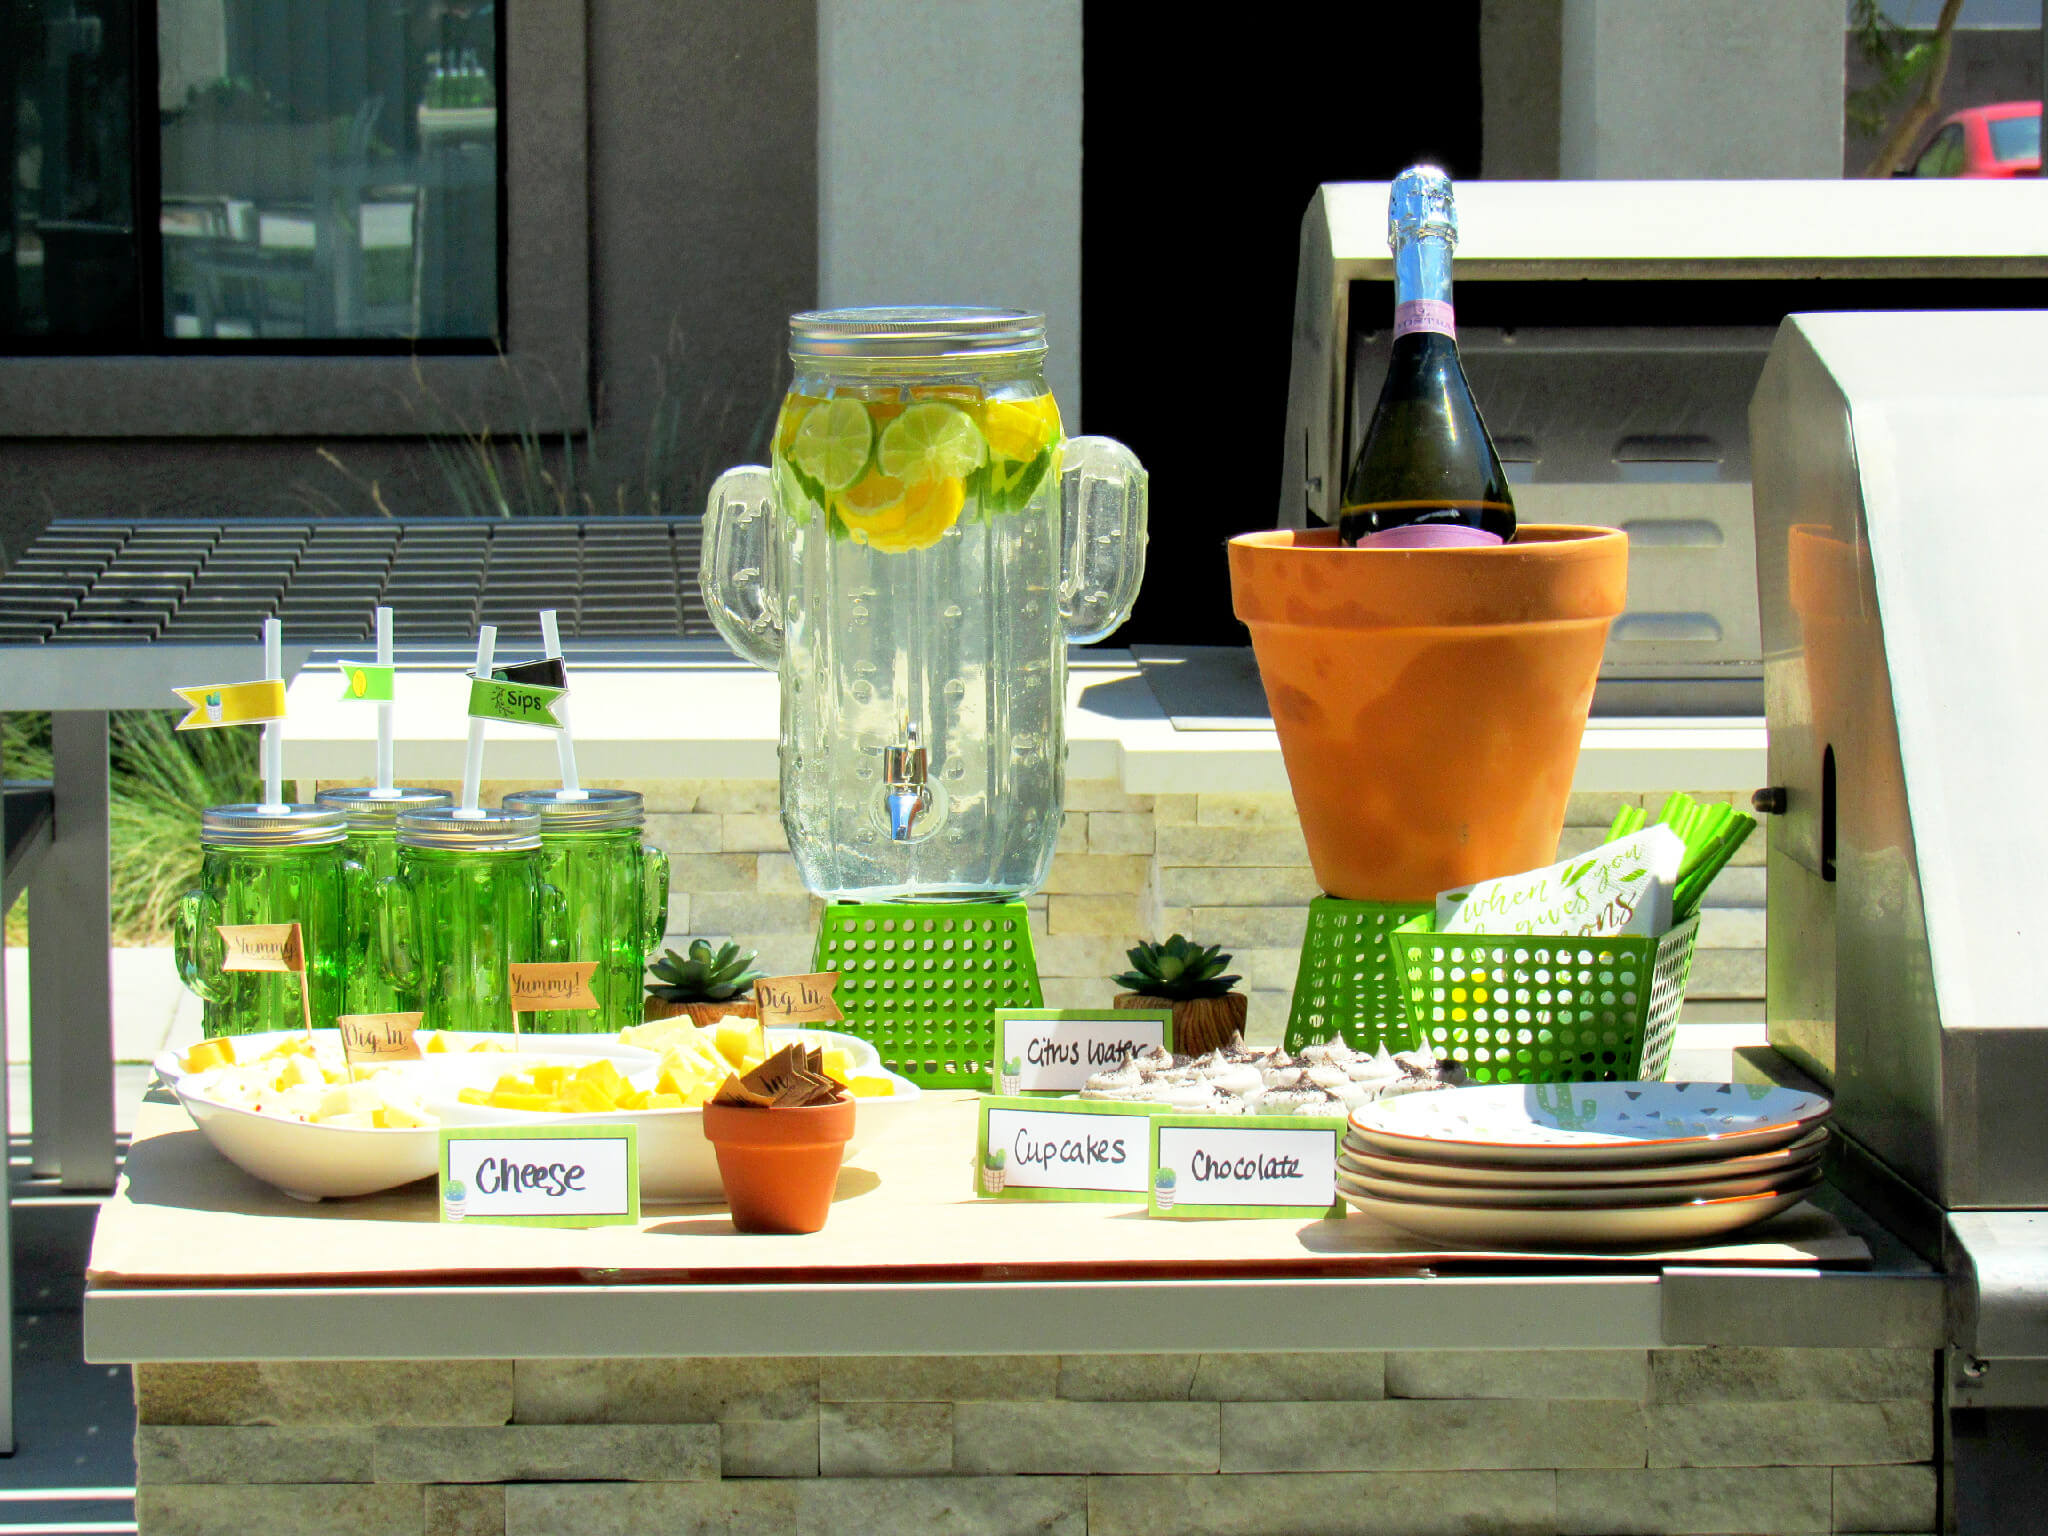 https://www.eventotb.com/wp-content/uploads/2020/06/EventOTB-sips-and-succulents-food-setup.jpg